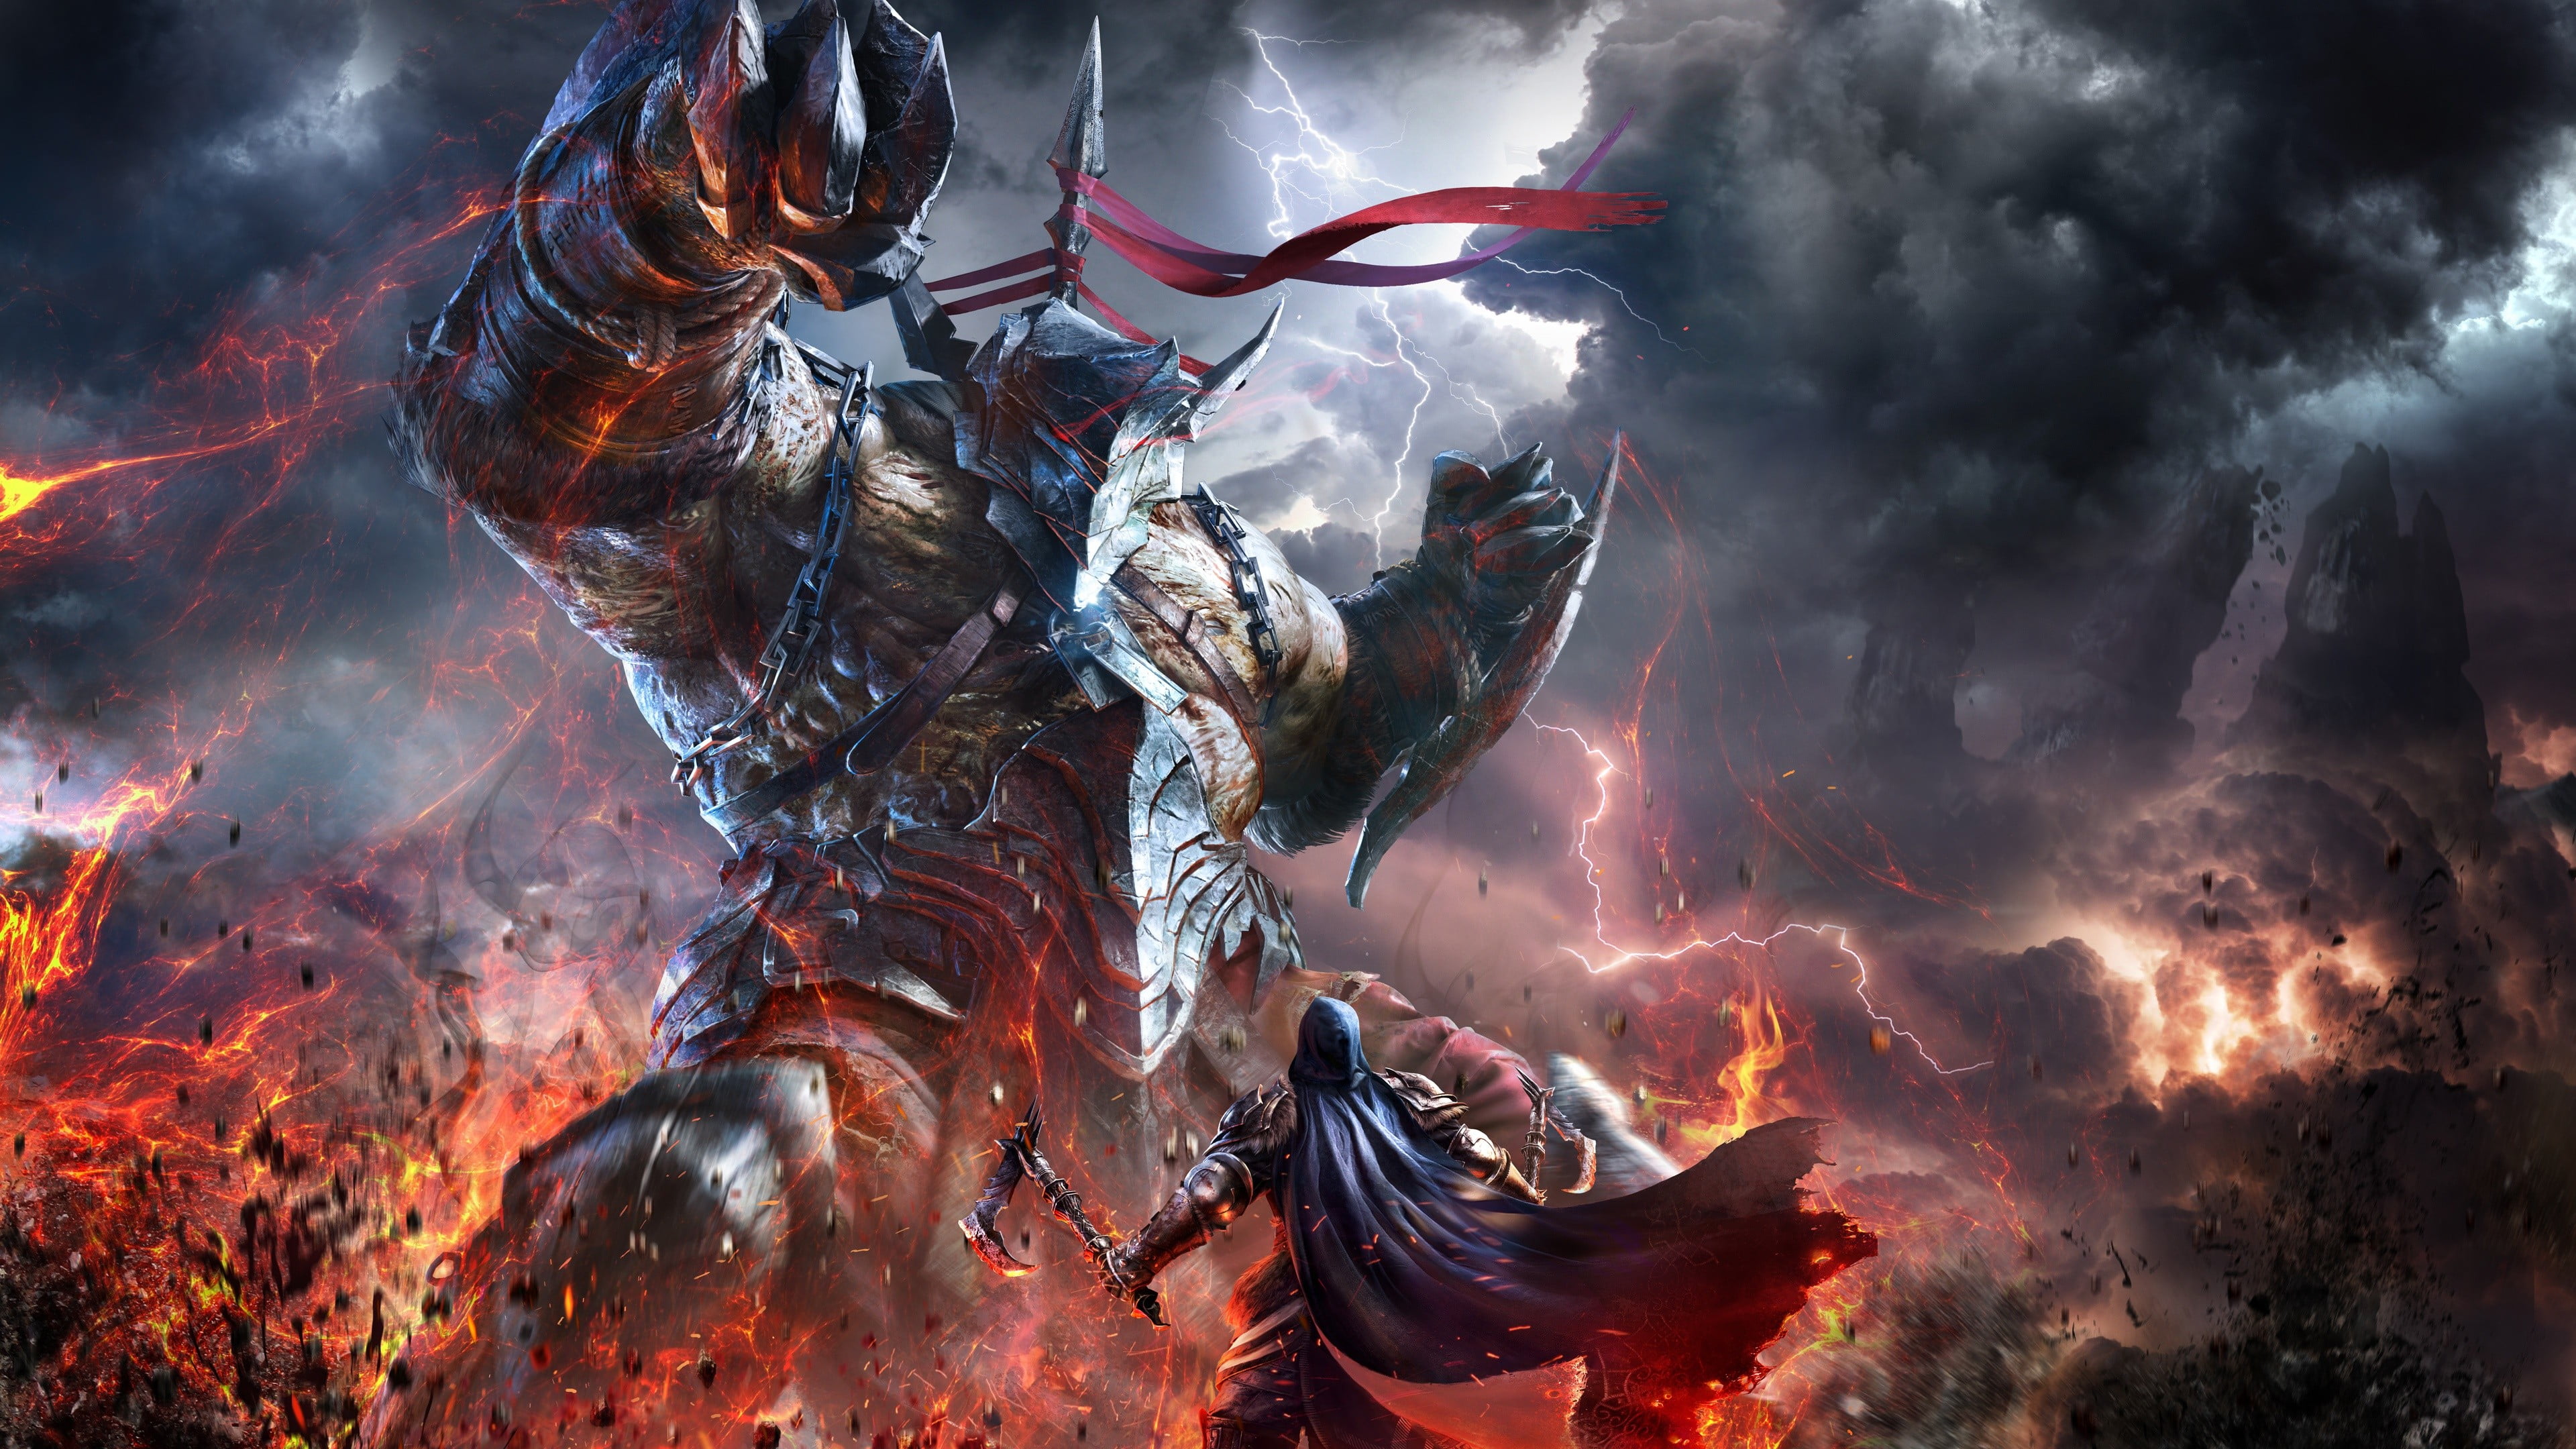 Sunset Frost Demon - Tribes of Midgard (RPG Video Game) 4K wallpaper  download